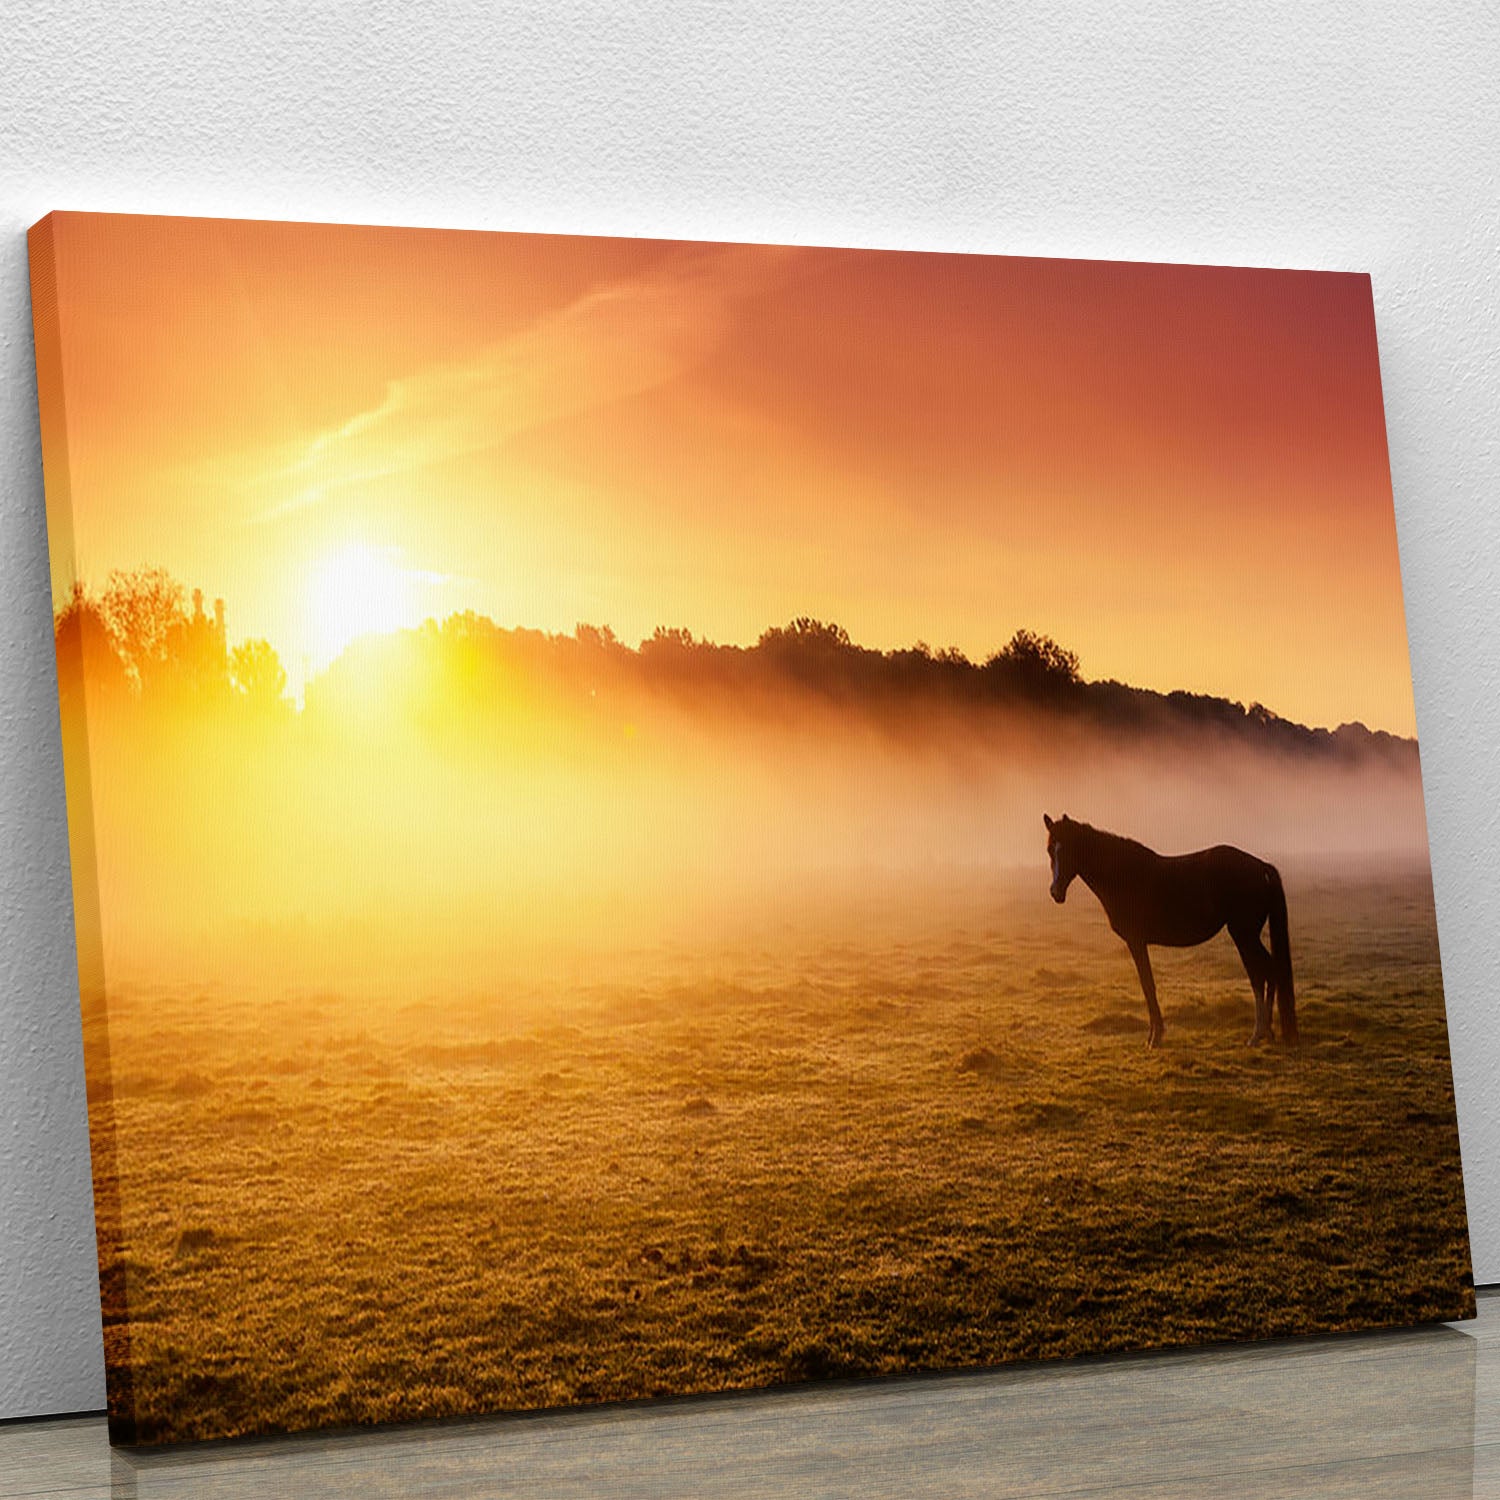 Arabian horses grazing on pasture at sundown in orange sunny beams. Dramatic foggy scene Canvas Print or Poster - Canvas Art Rocks - 1